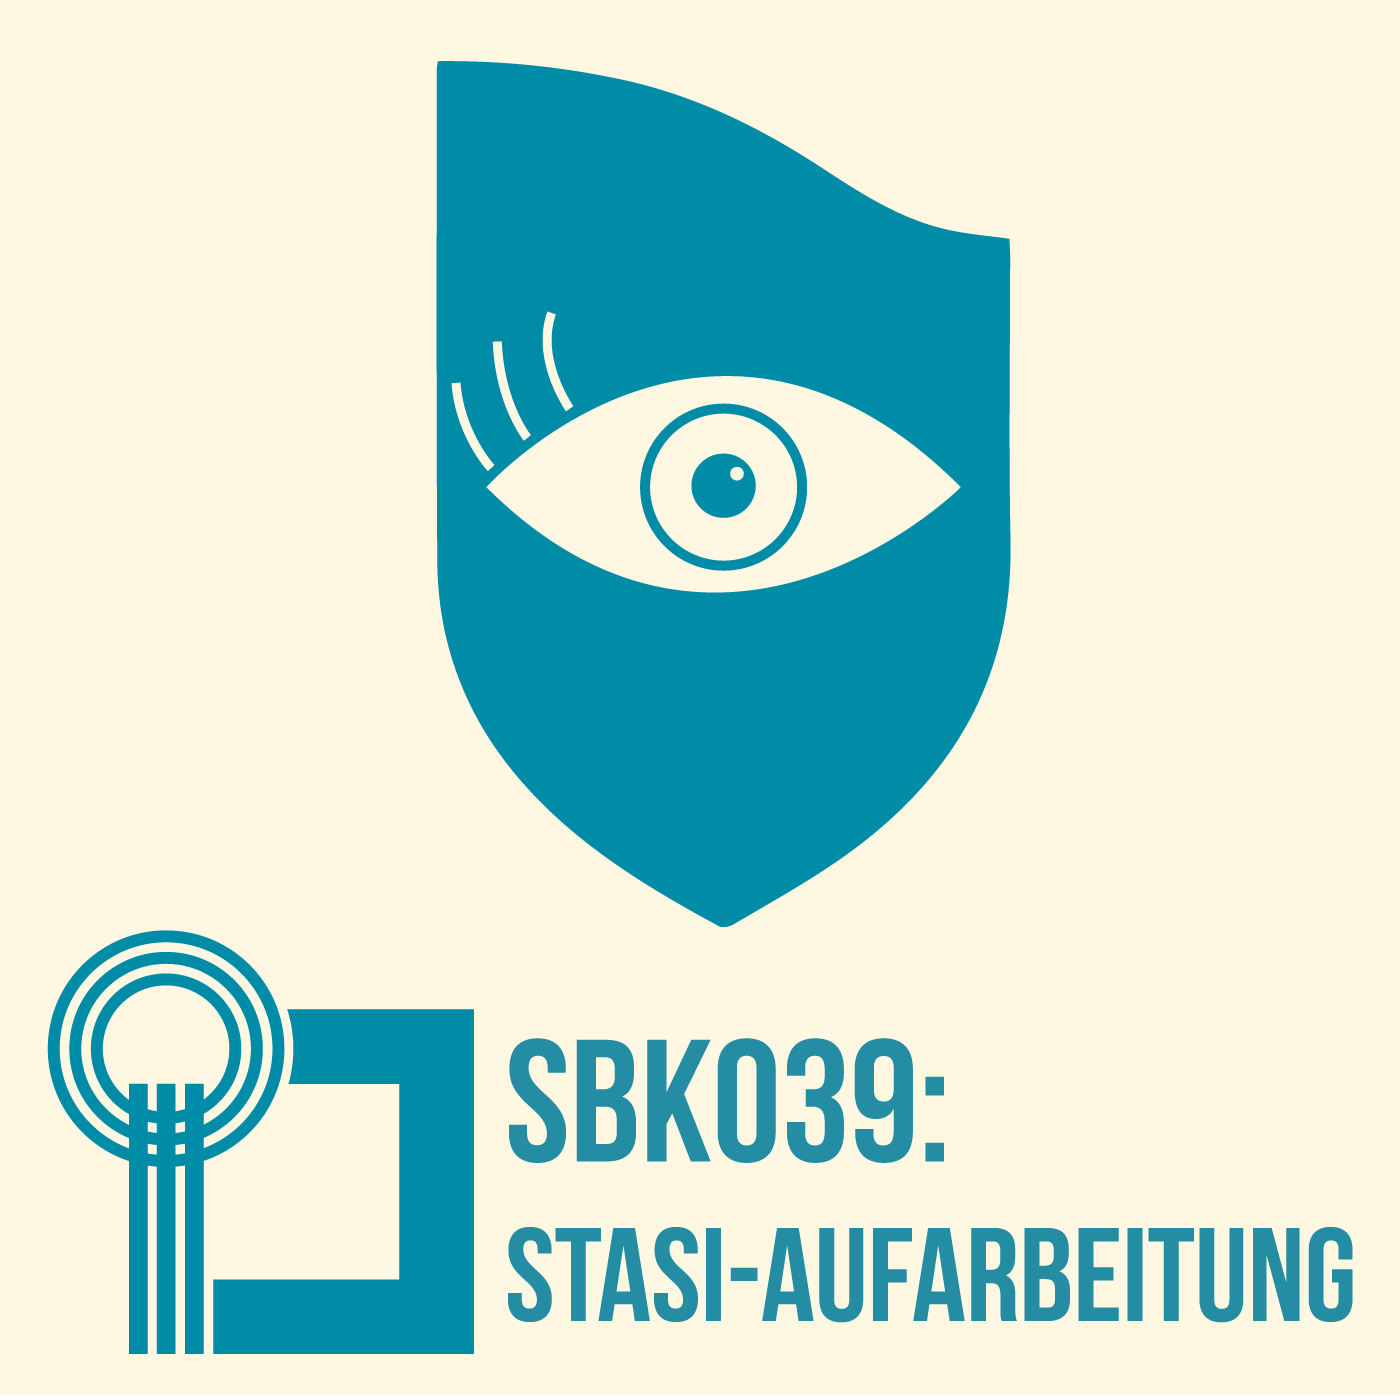 Stasi-Aufarbeitung